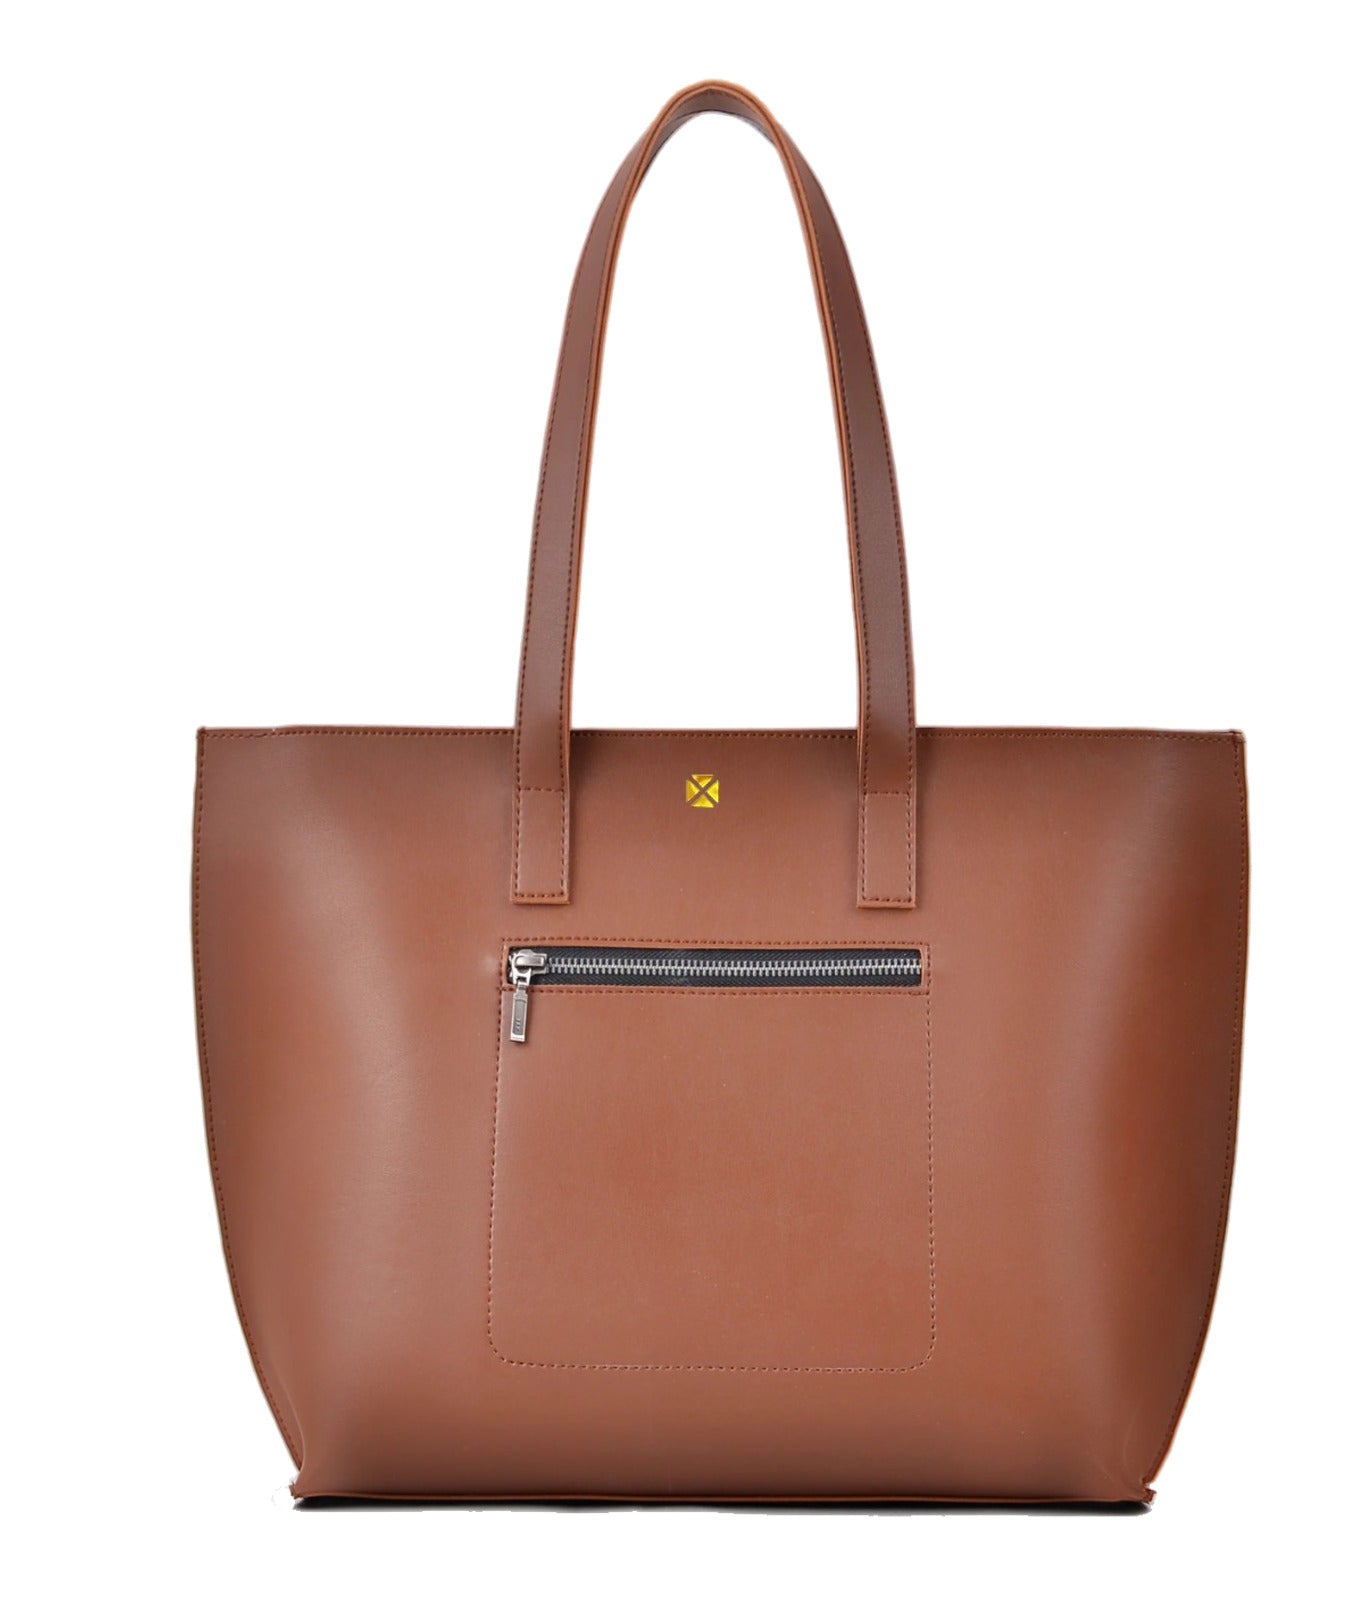 Tokyo Brown handbag